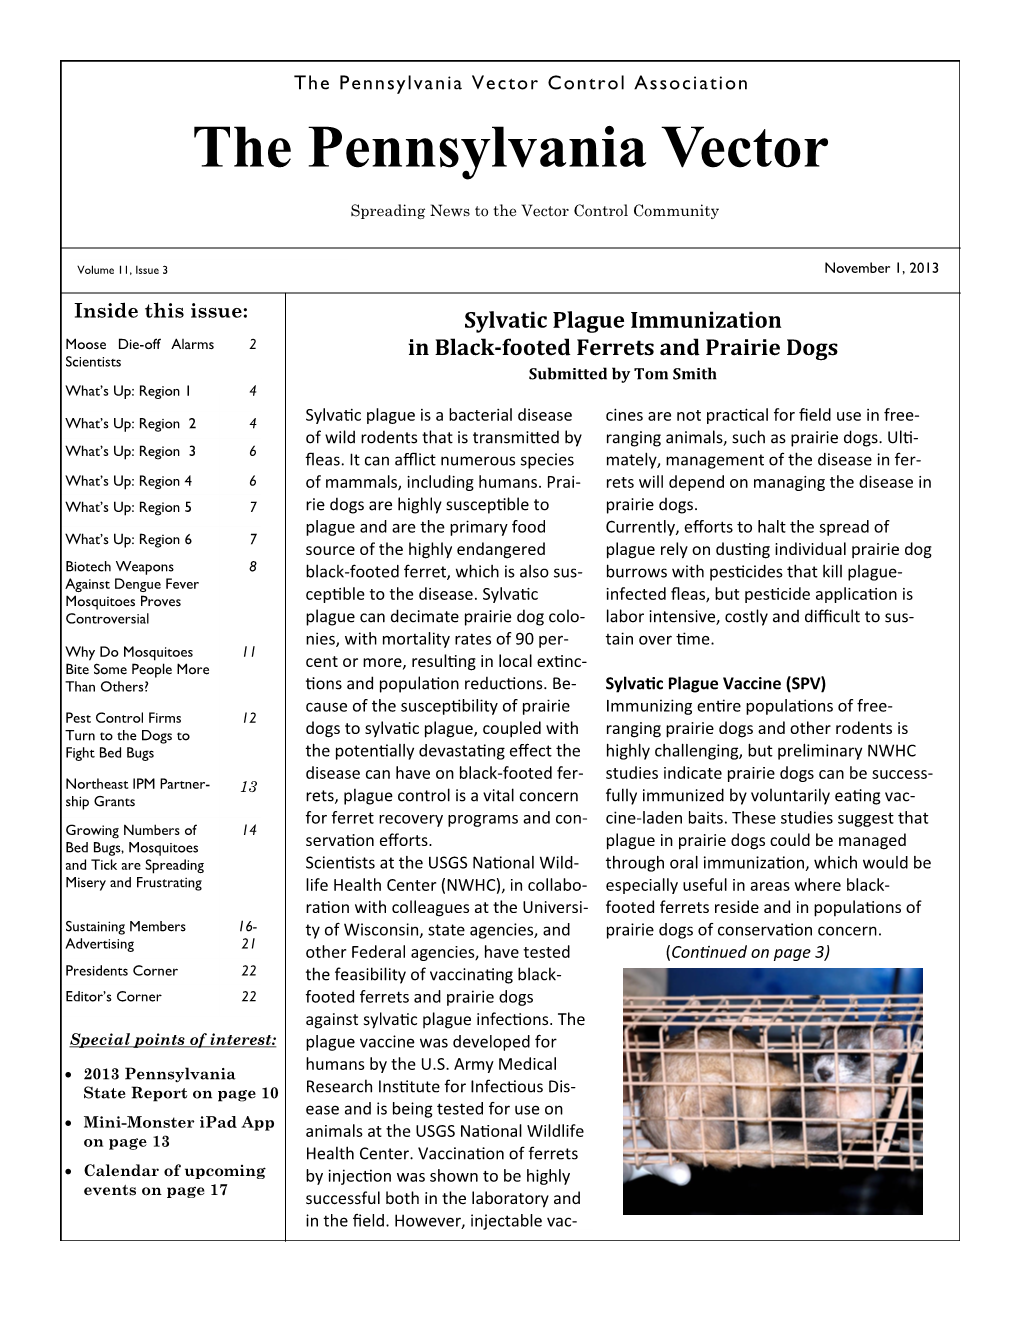 The Pennsylvania Vector Control Association the Pennsylvania Vector Spreading News to the Vector Control Community